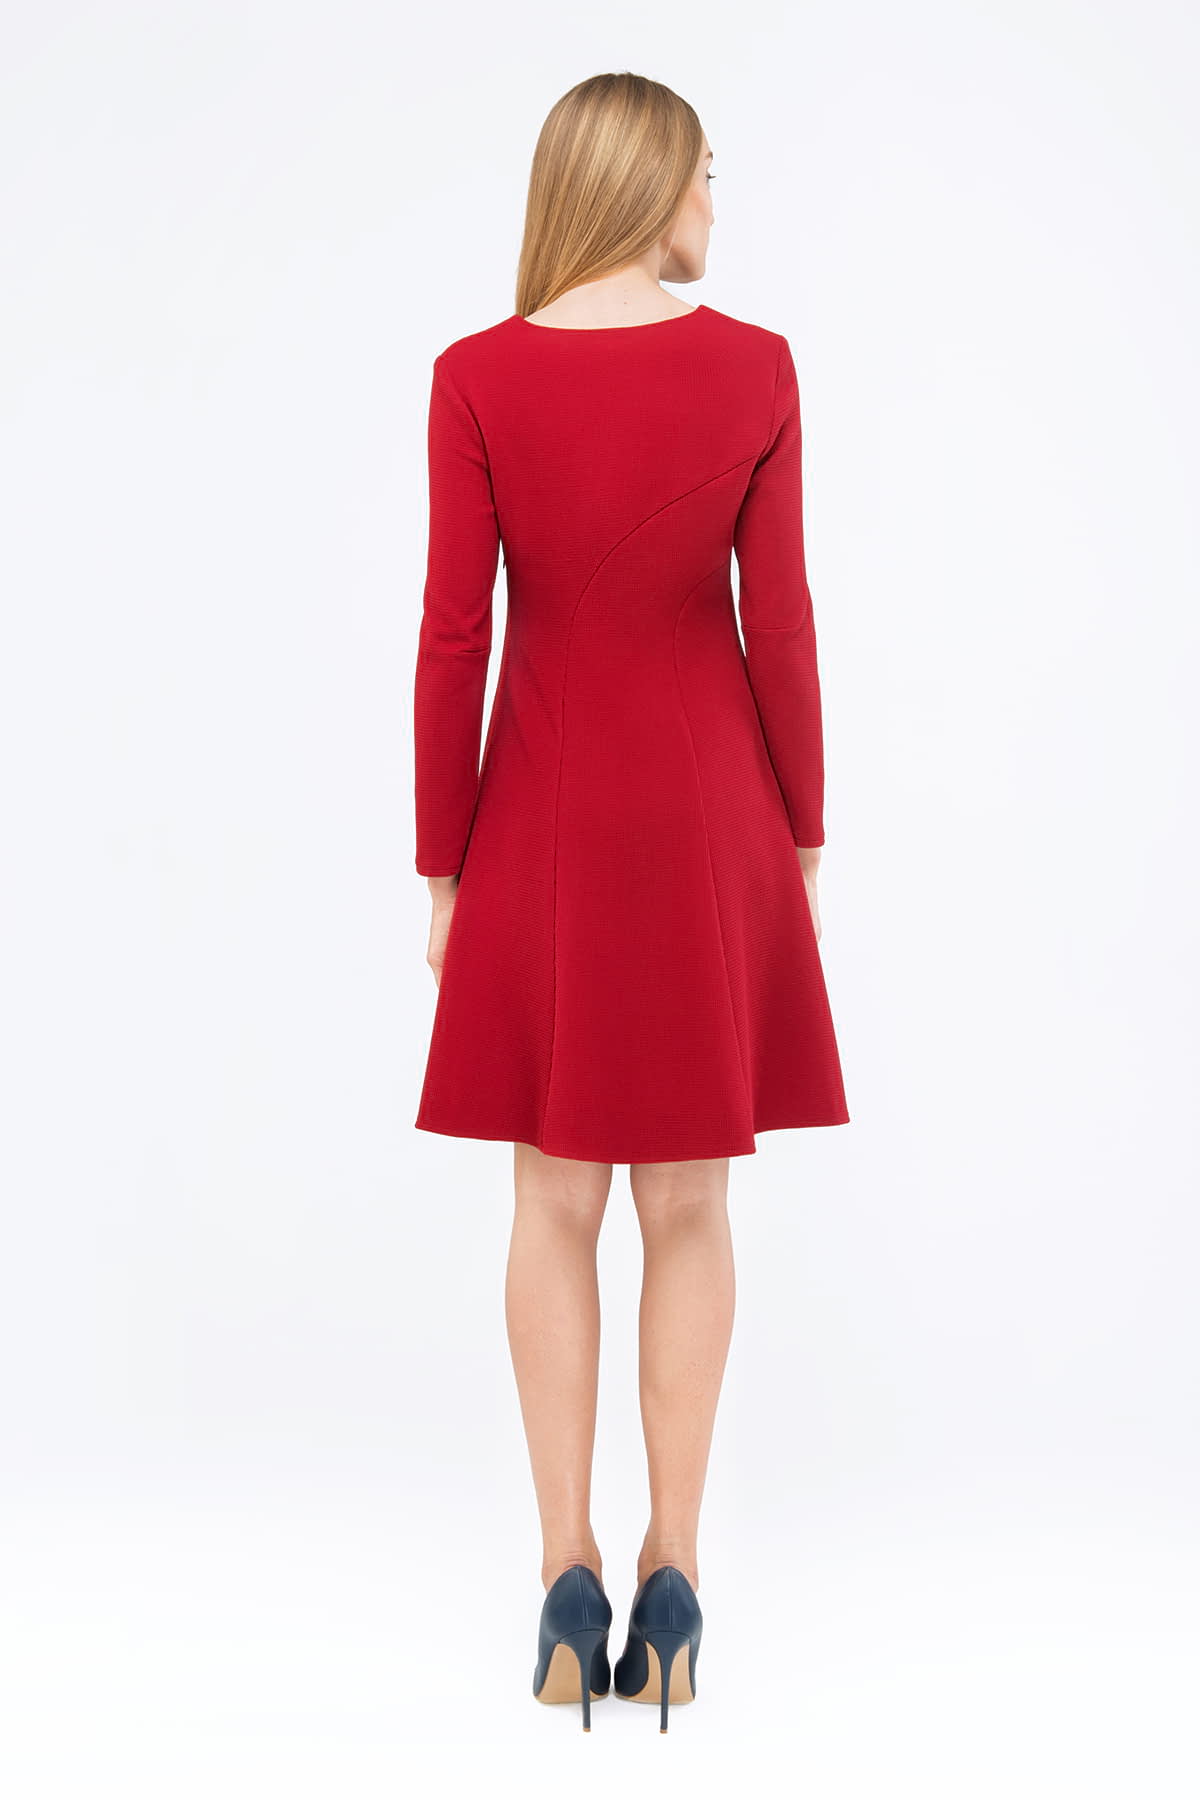 Red A-line dress , photo 5